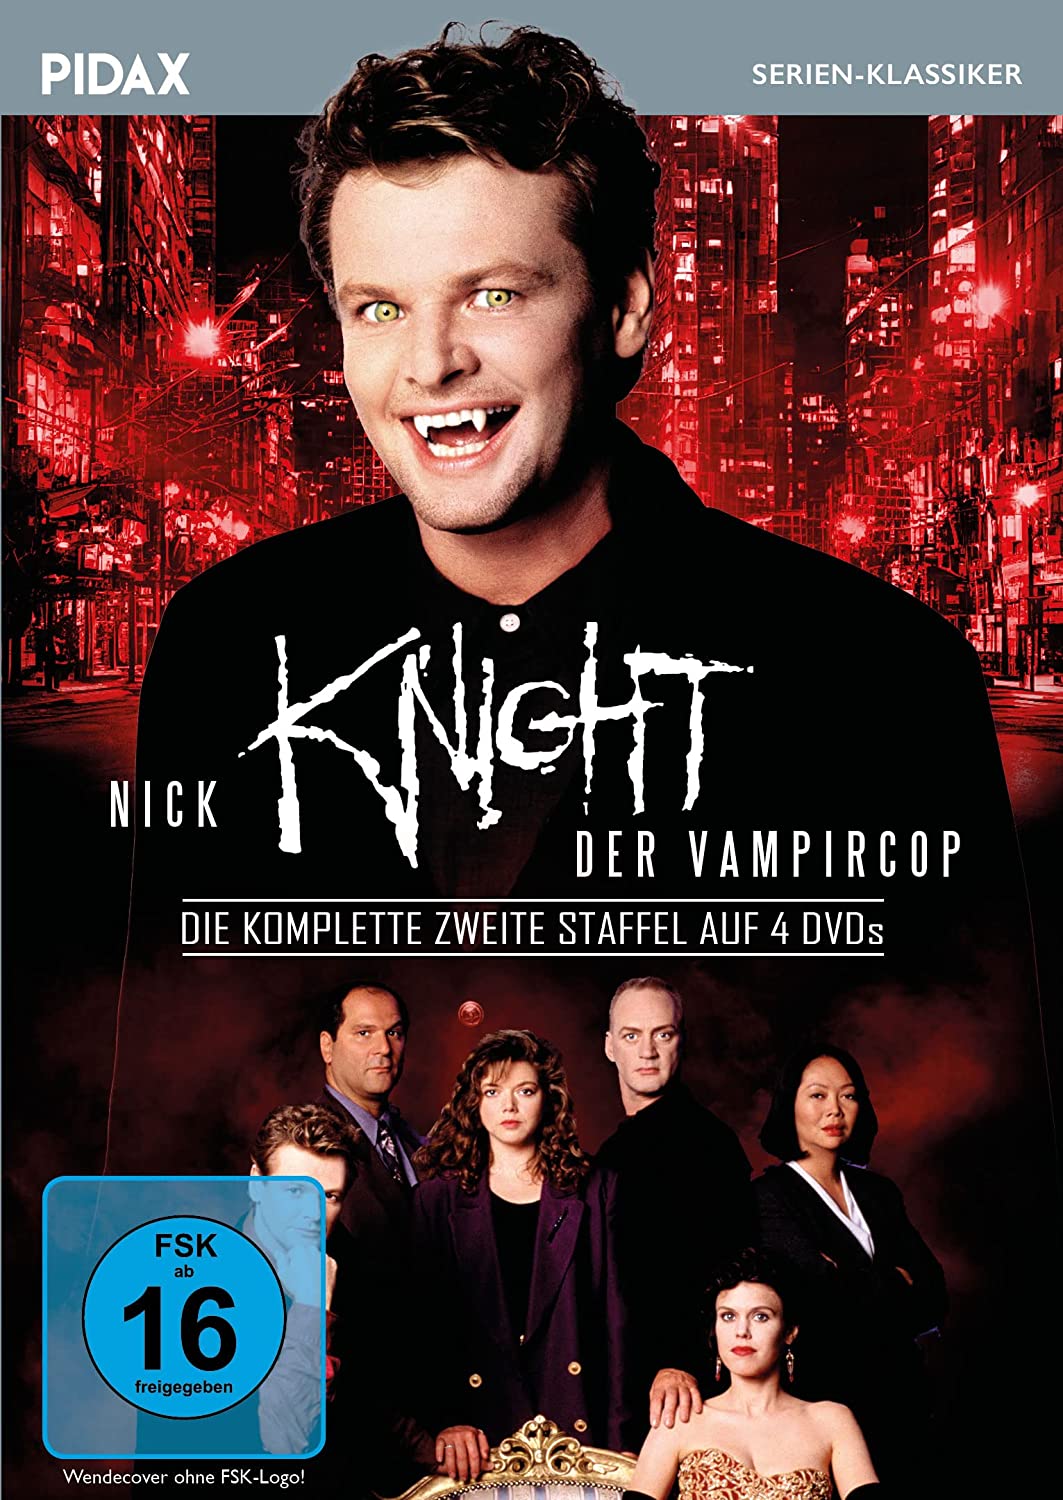 Nick Knight - der Vampircop - Kompl. Staffel 2, 26 Folgen der Krimiserie